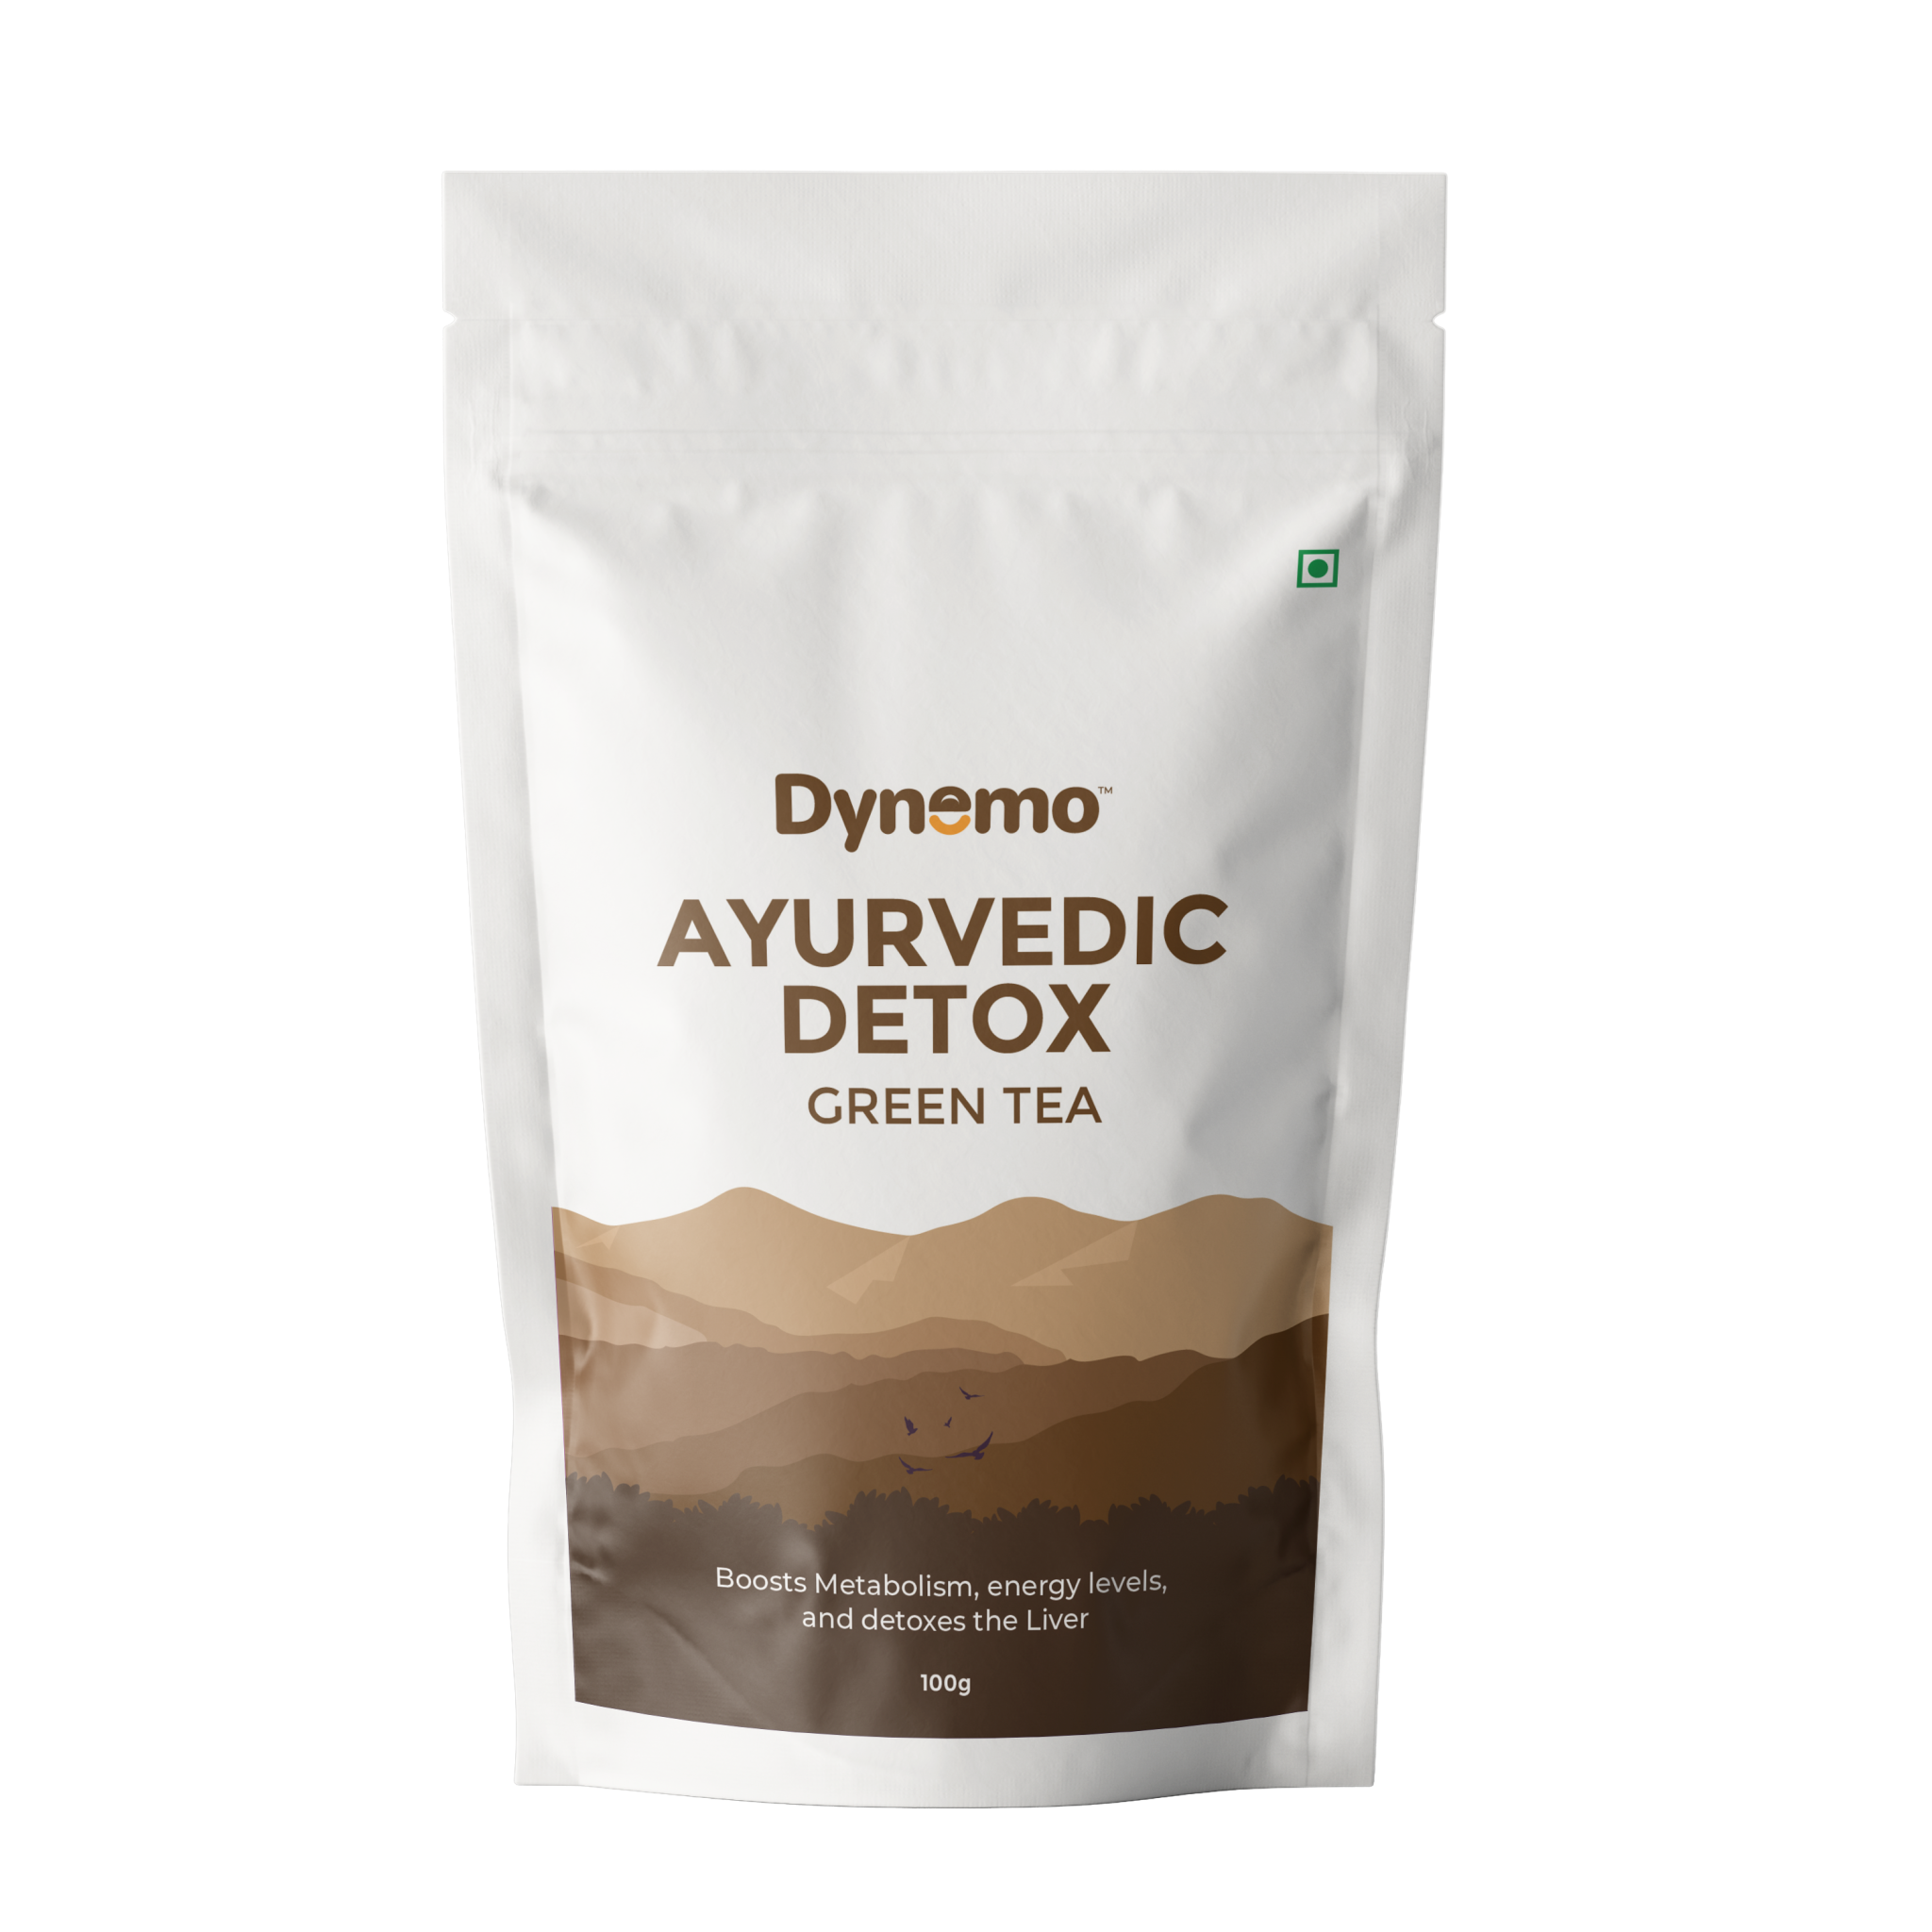 Product: Dynemo Ayurvedic Detox Green Tea